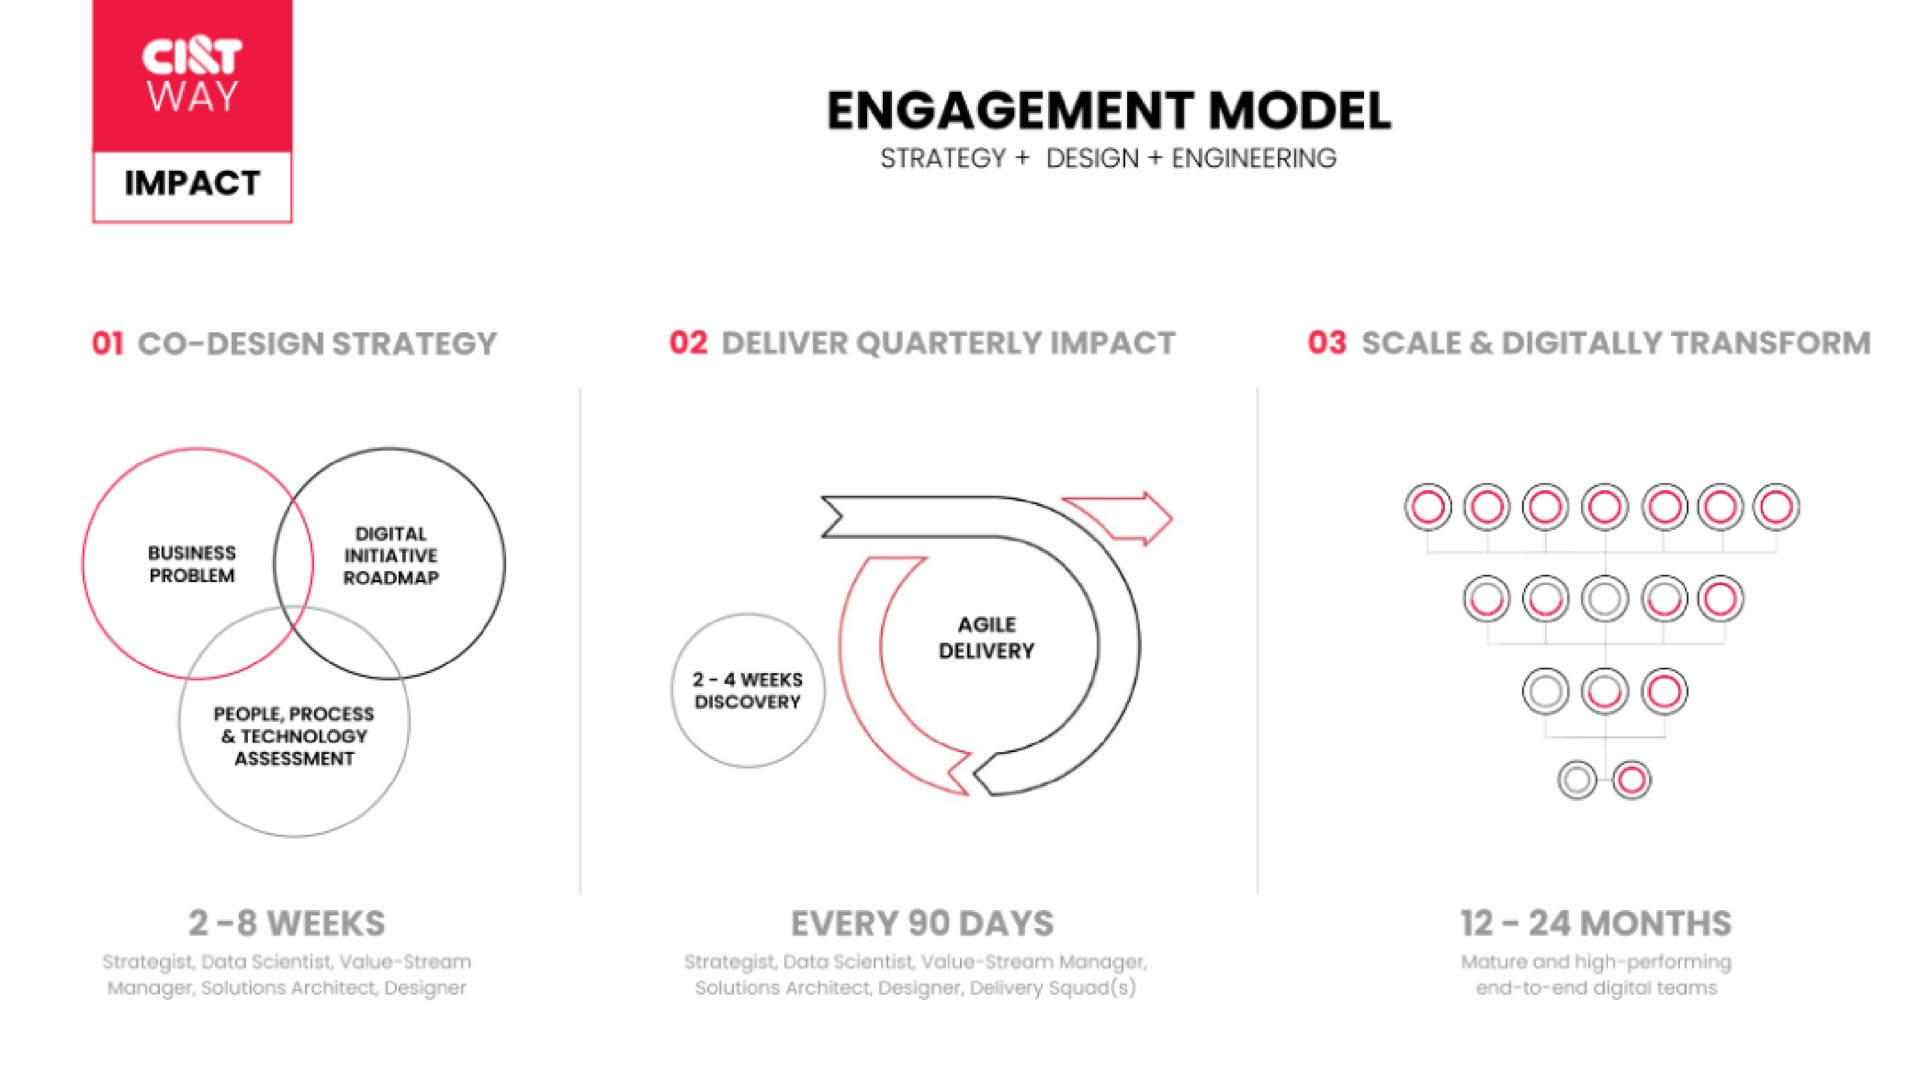 cist way impact engagement model | CI&T